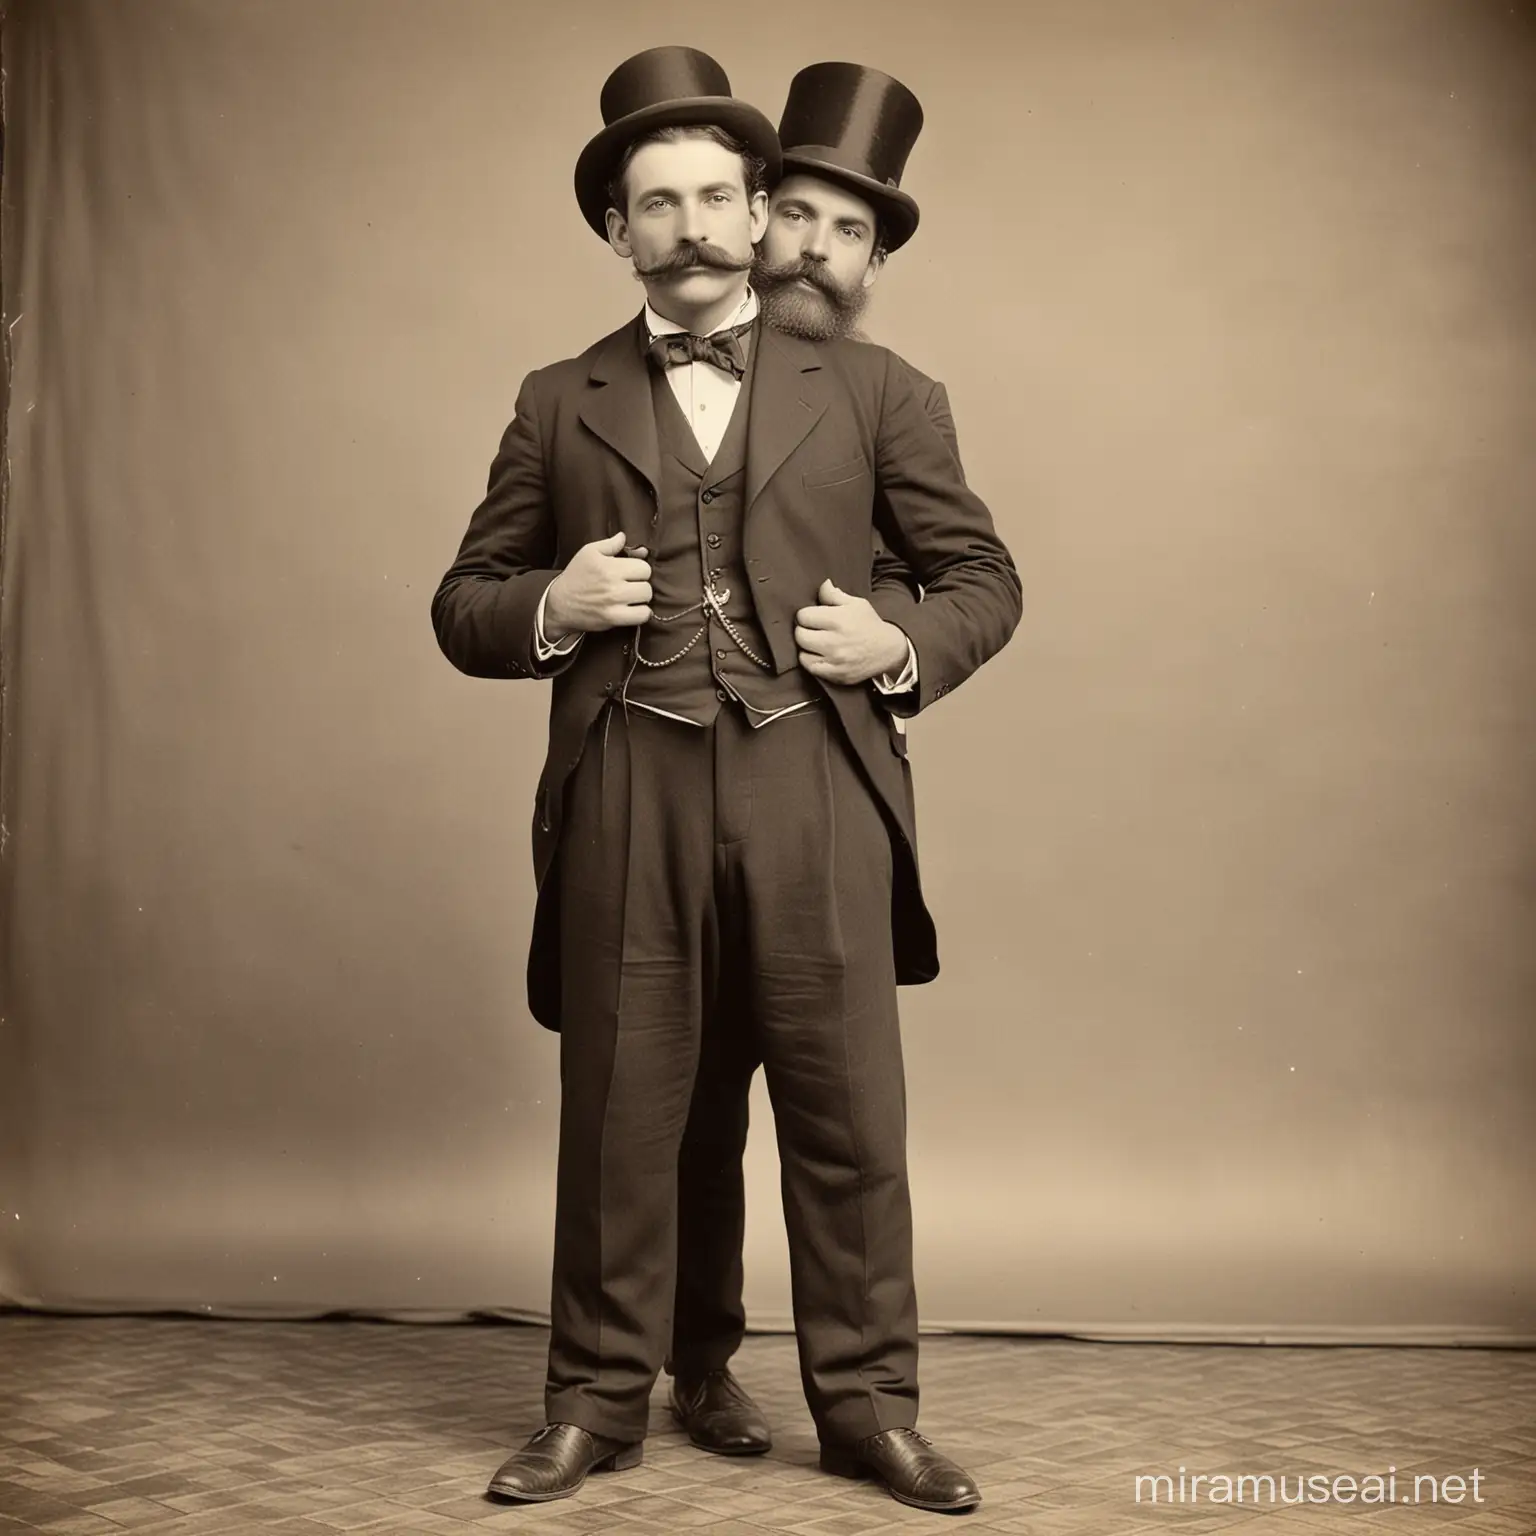 19th Century Monochrome Portrait of Men in Top Hats Piggybacking